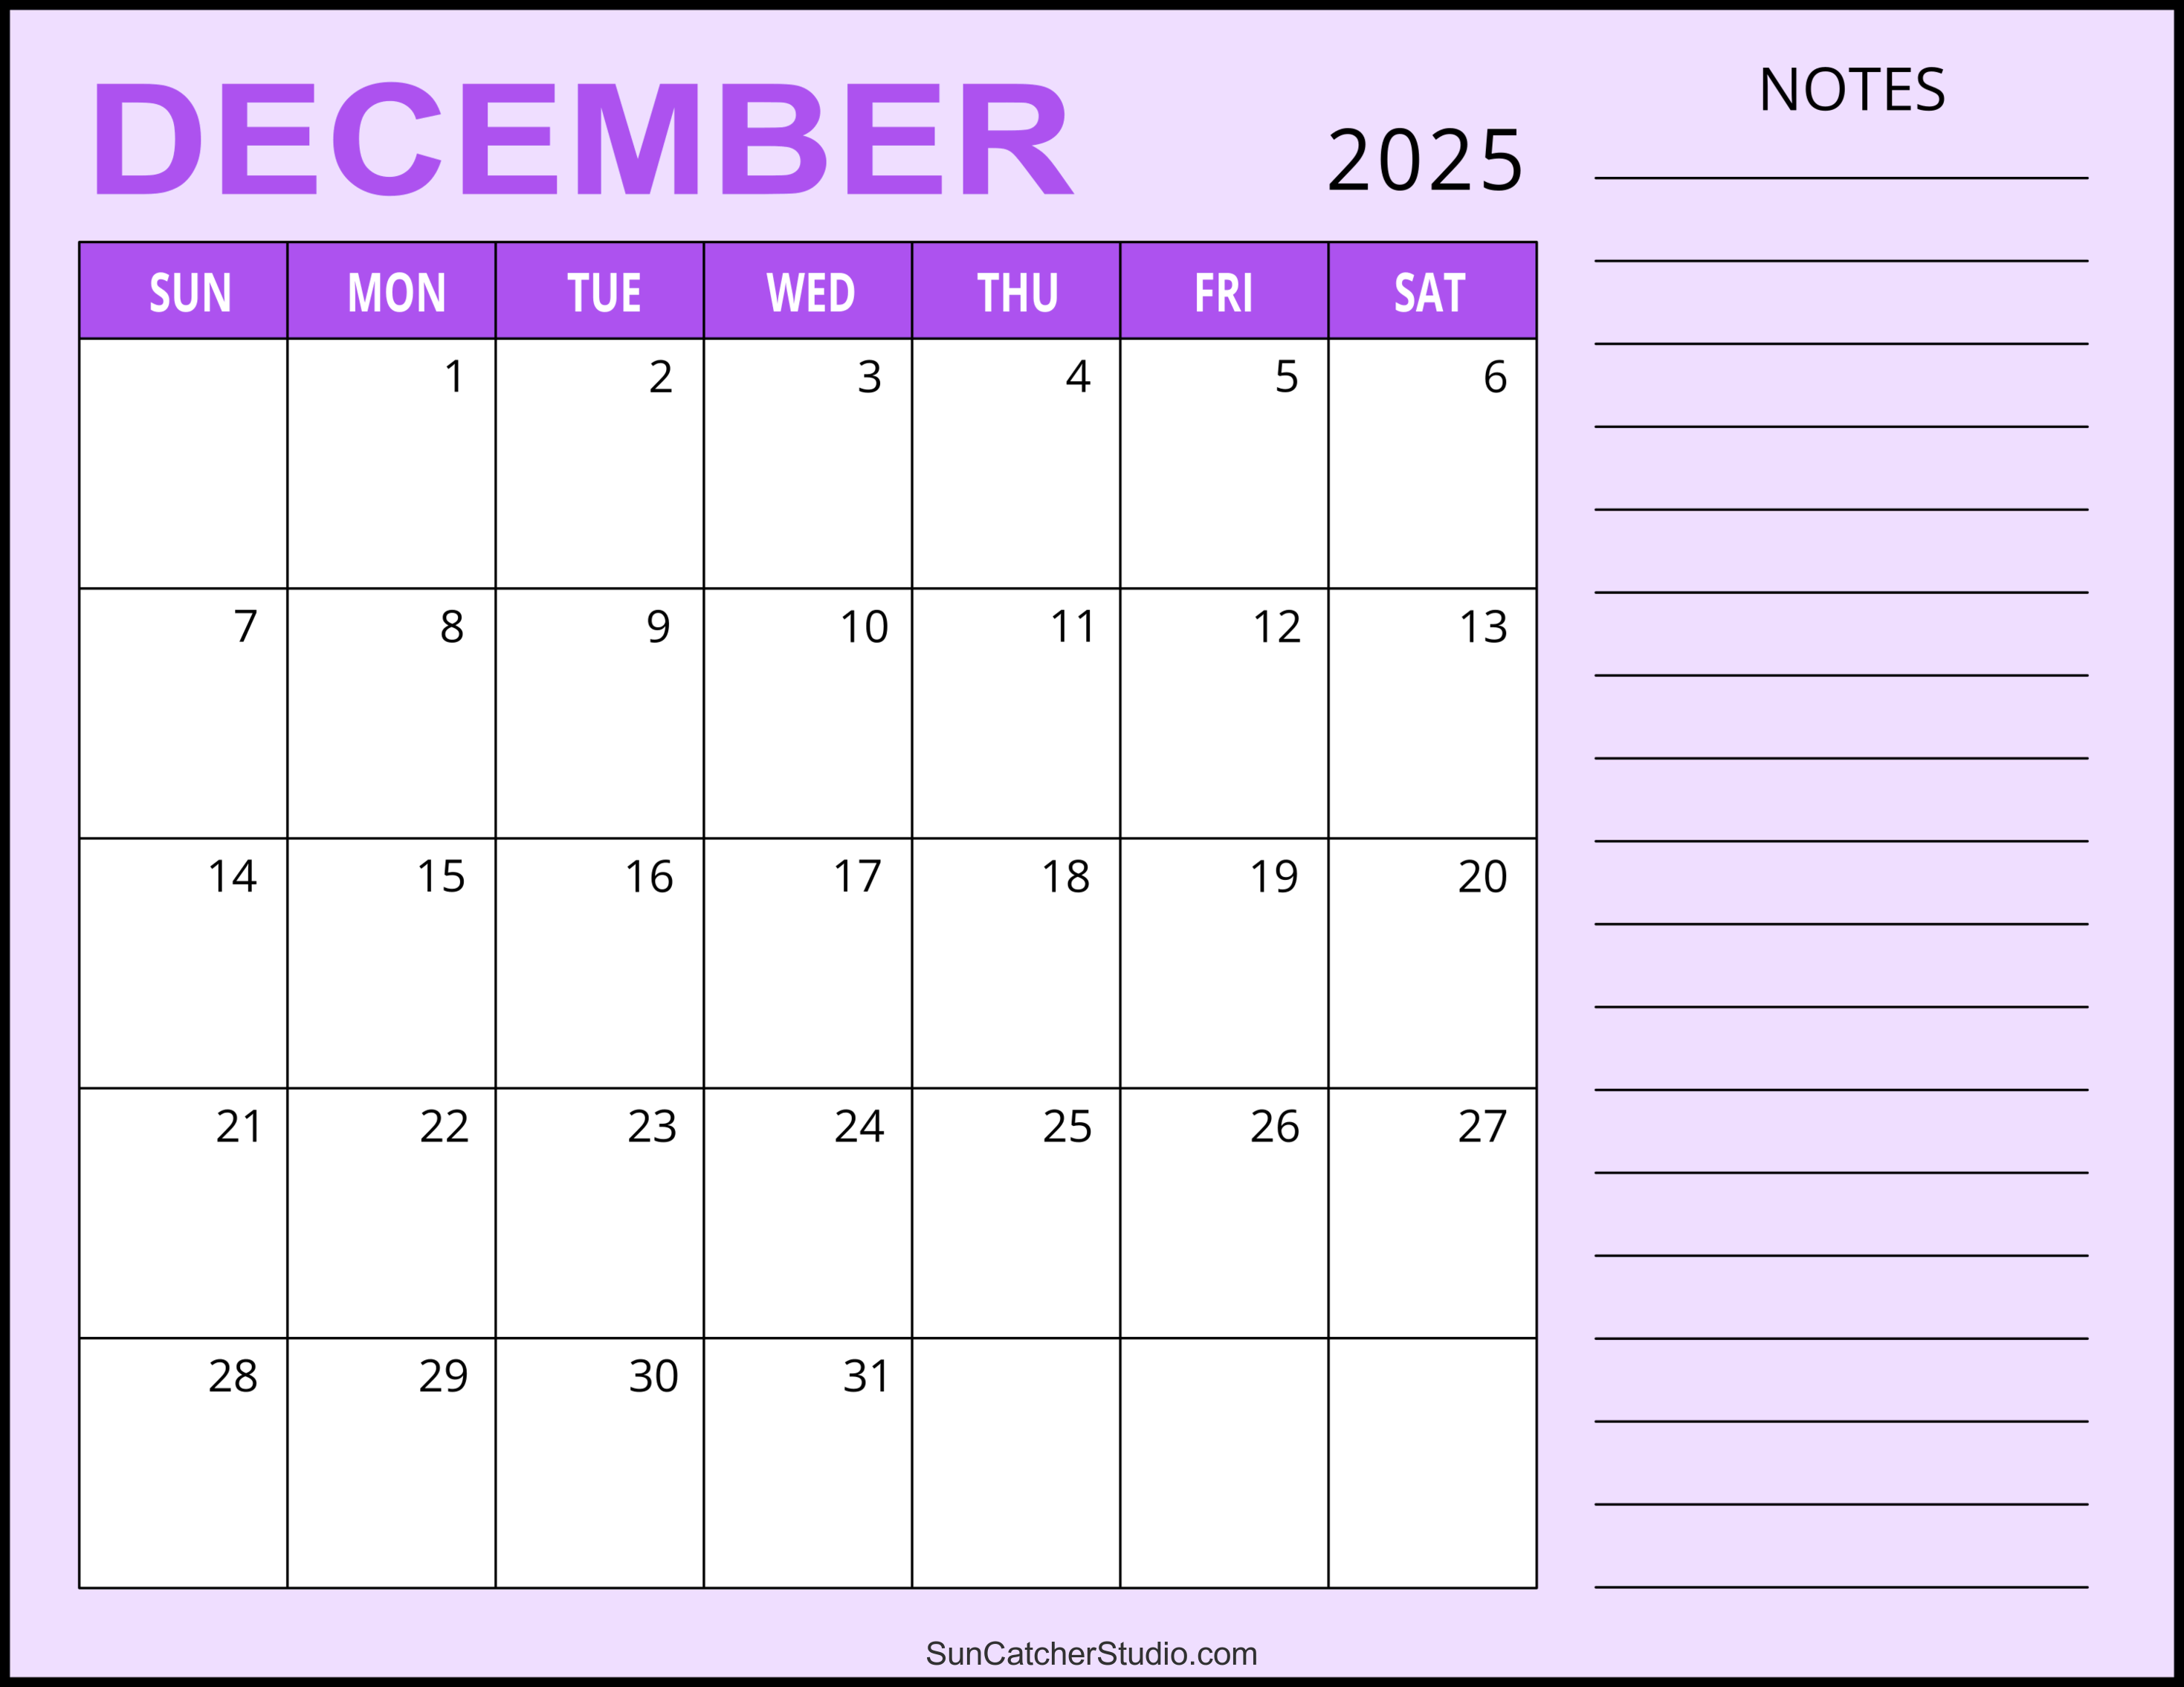 december-2025-calendar-free-printable-diy-projects-patterns